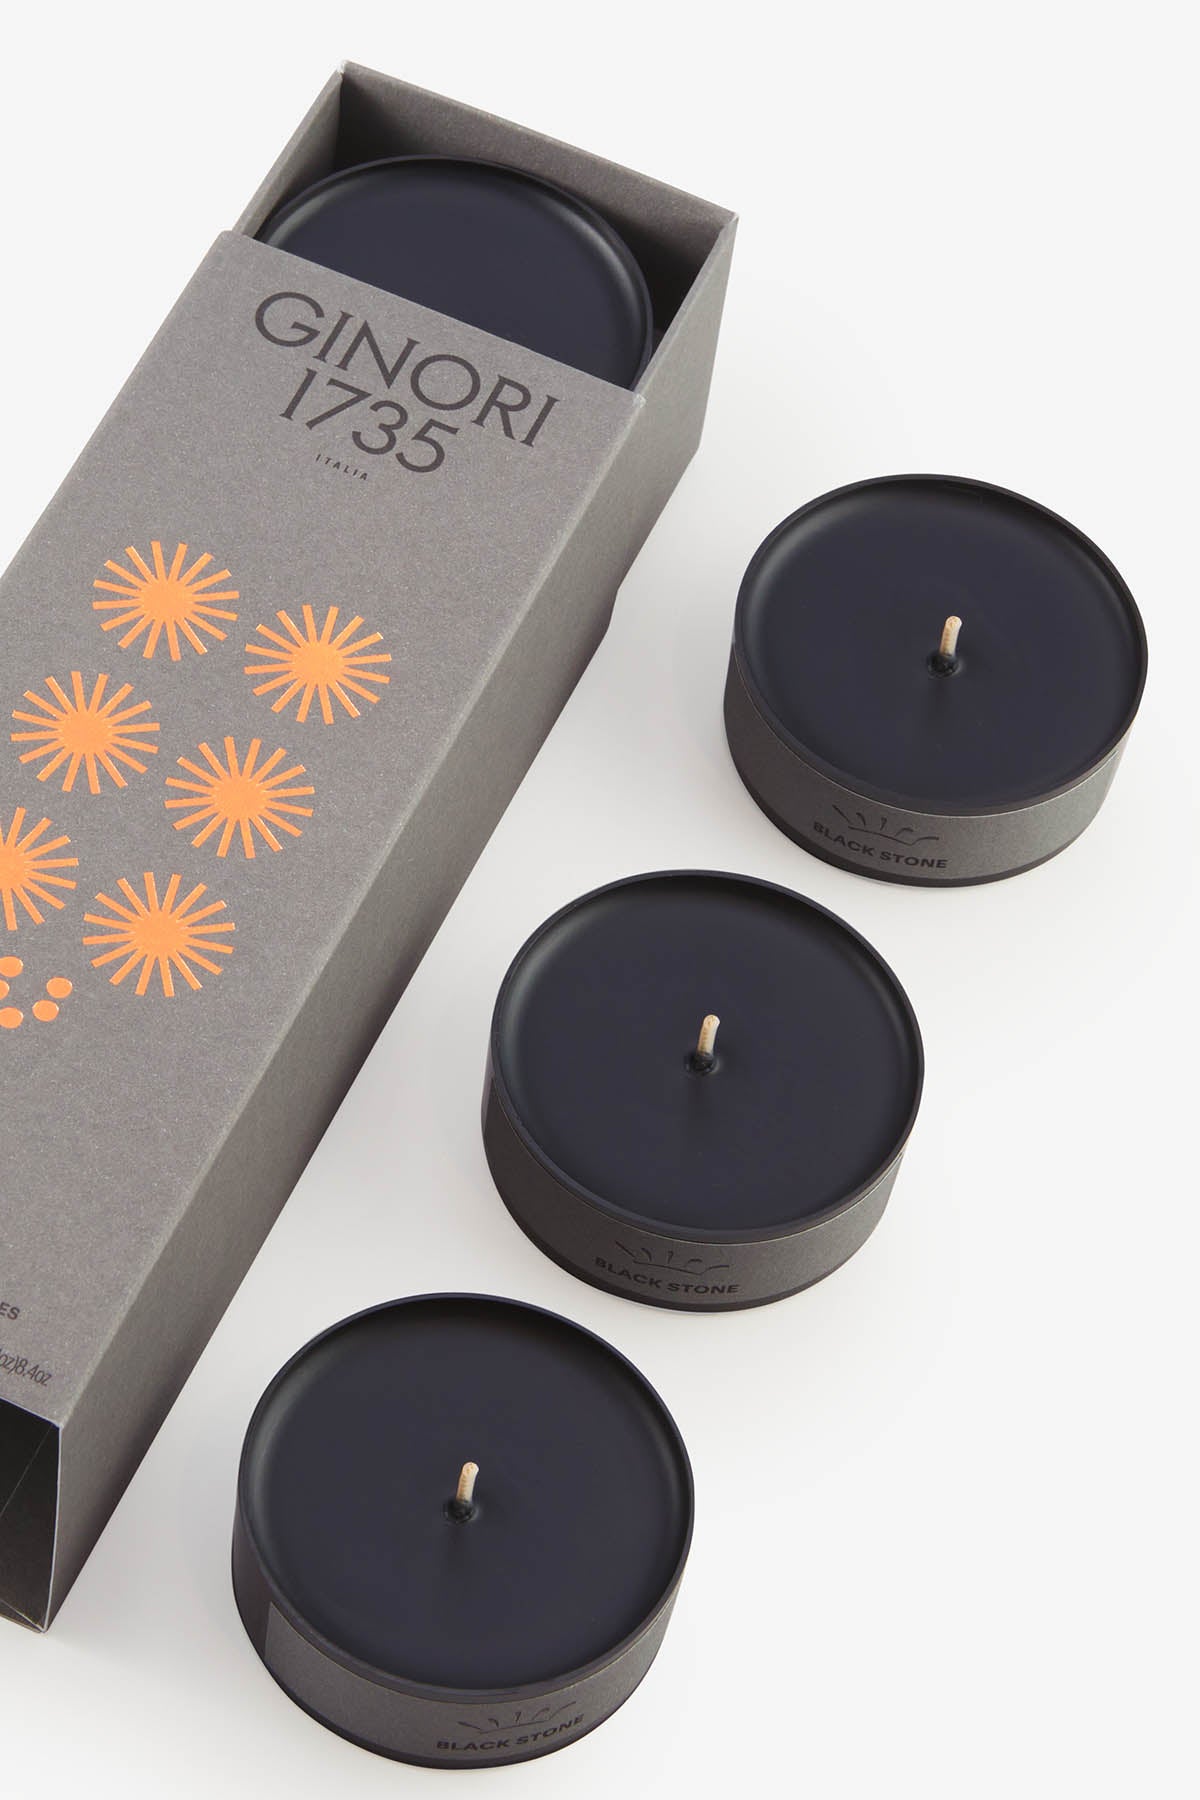 Ginori 1735 black stone scented tea light candles refill-2